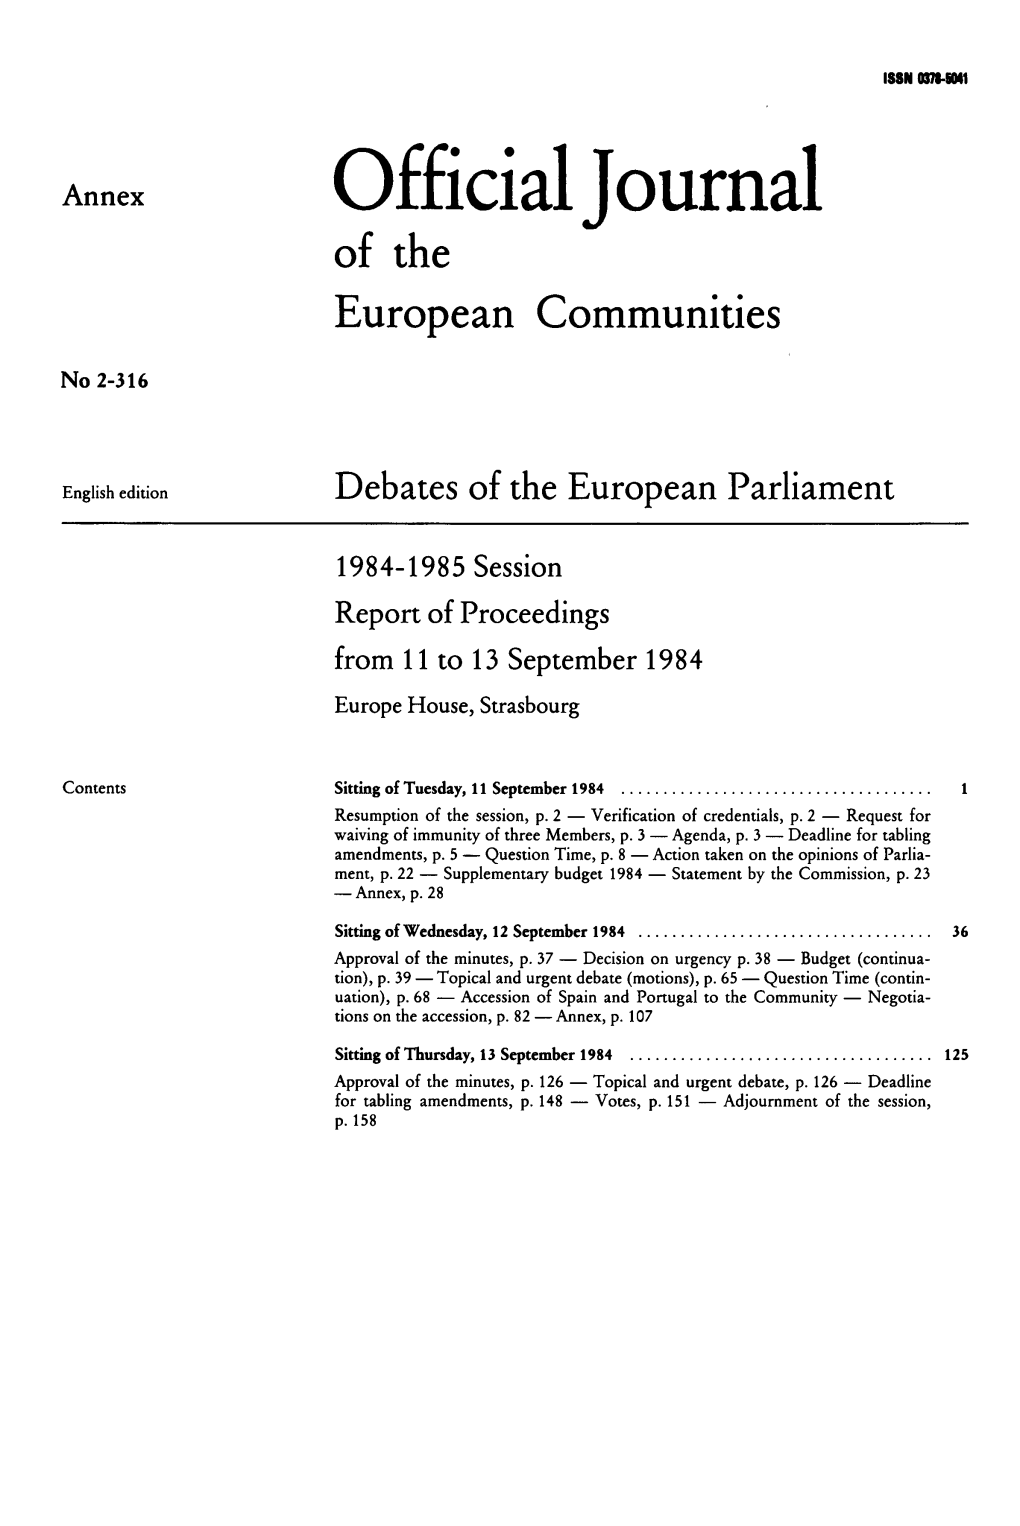 Officiauournal of the European Communities No 2-316 W*@